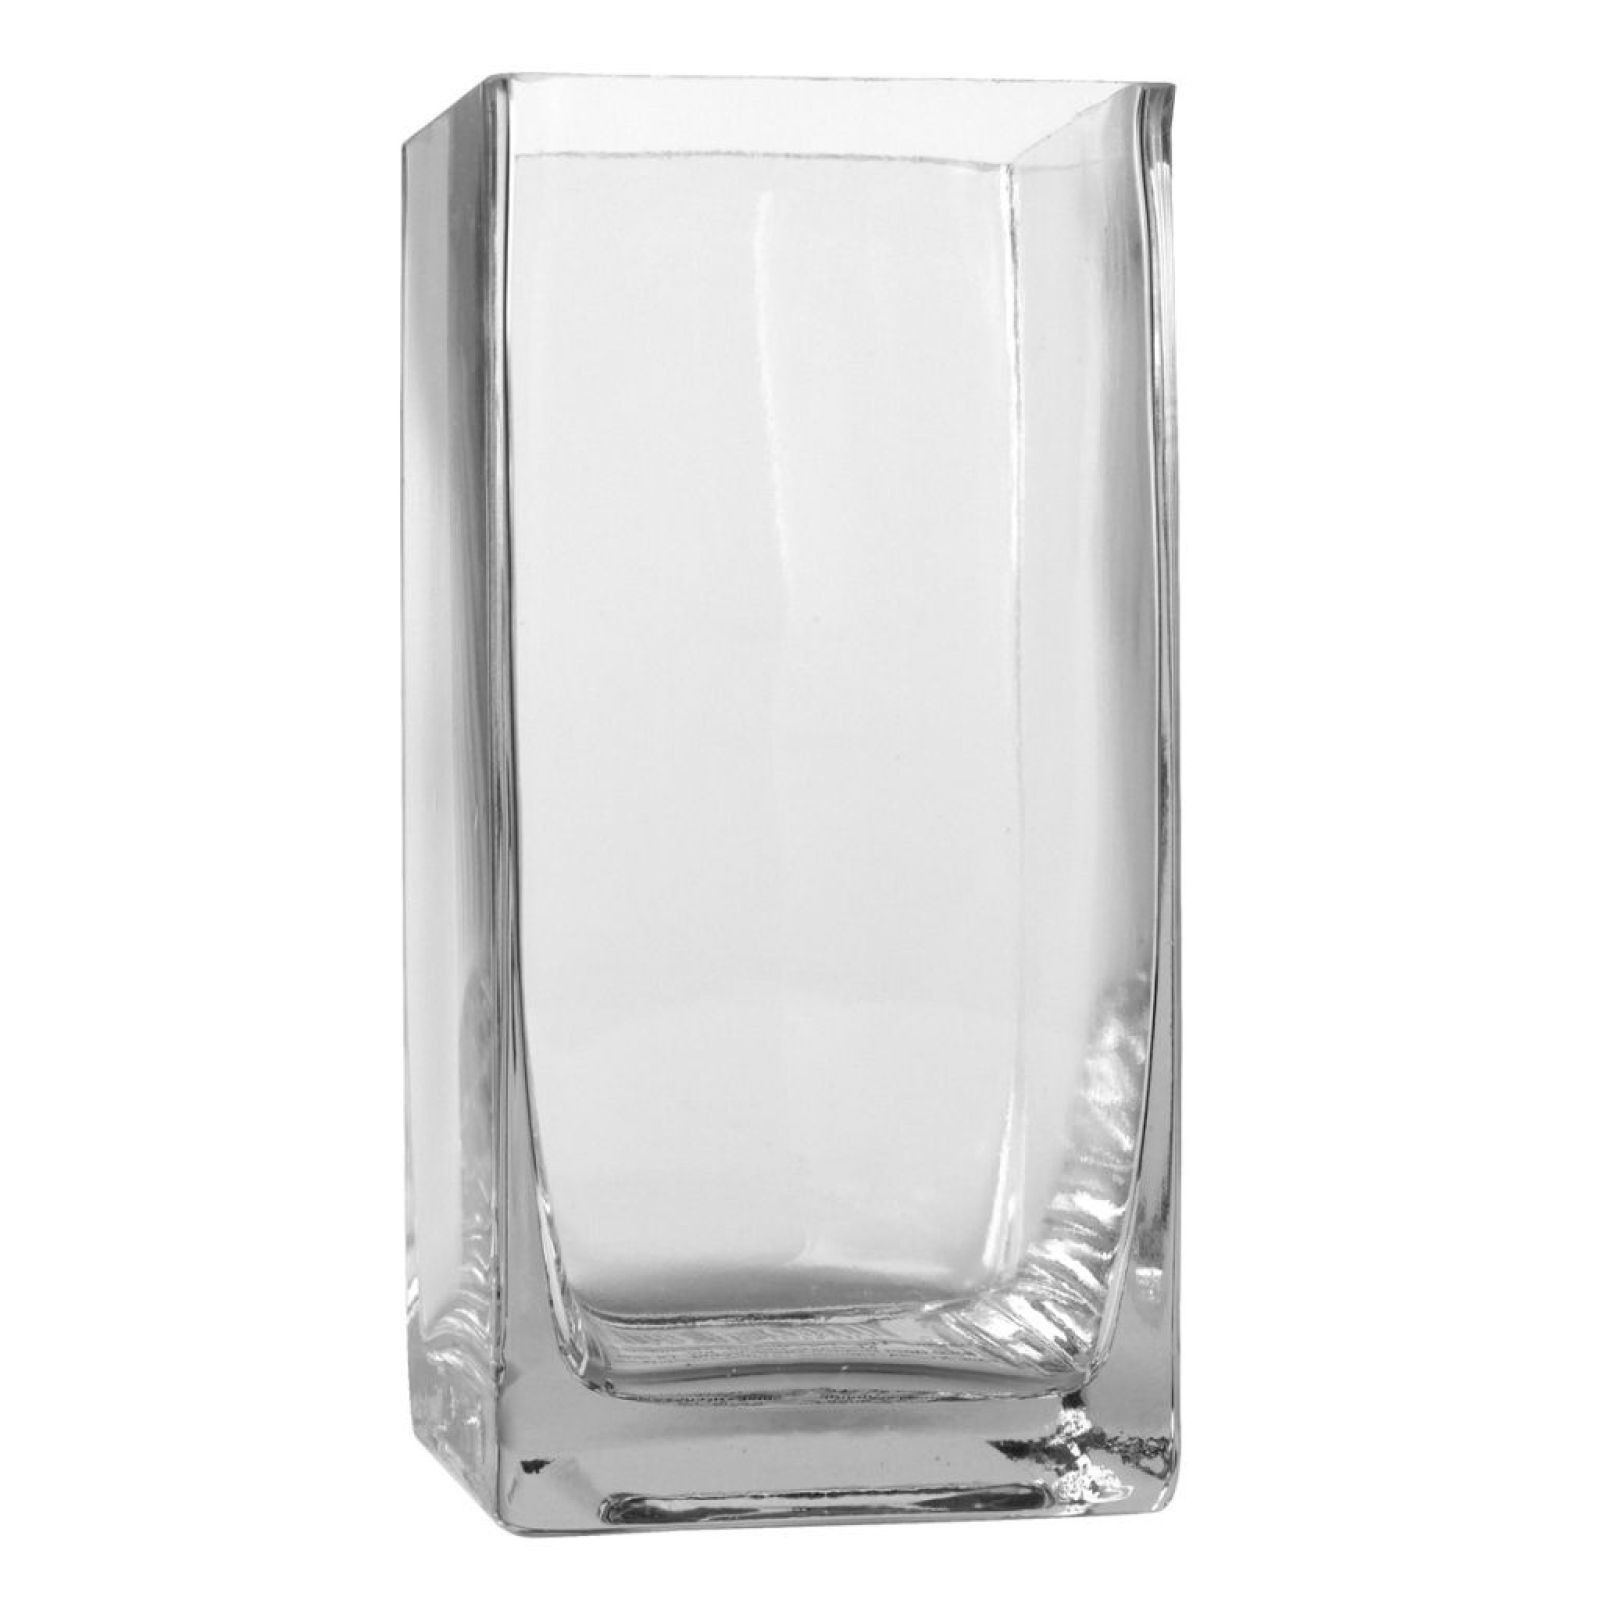 10 Amazing 8 Inch Cylinder Vase 2024 free download 8 inch cylinder vase of ashland tall cube glass vase cube and glass in ashlanda tall cube glass vase 6